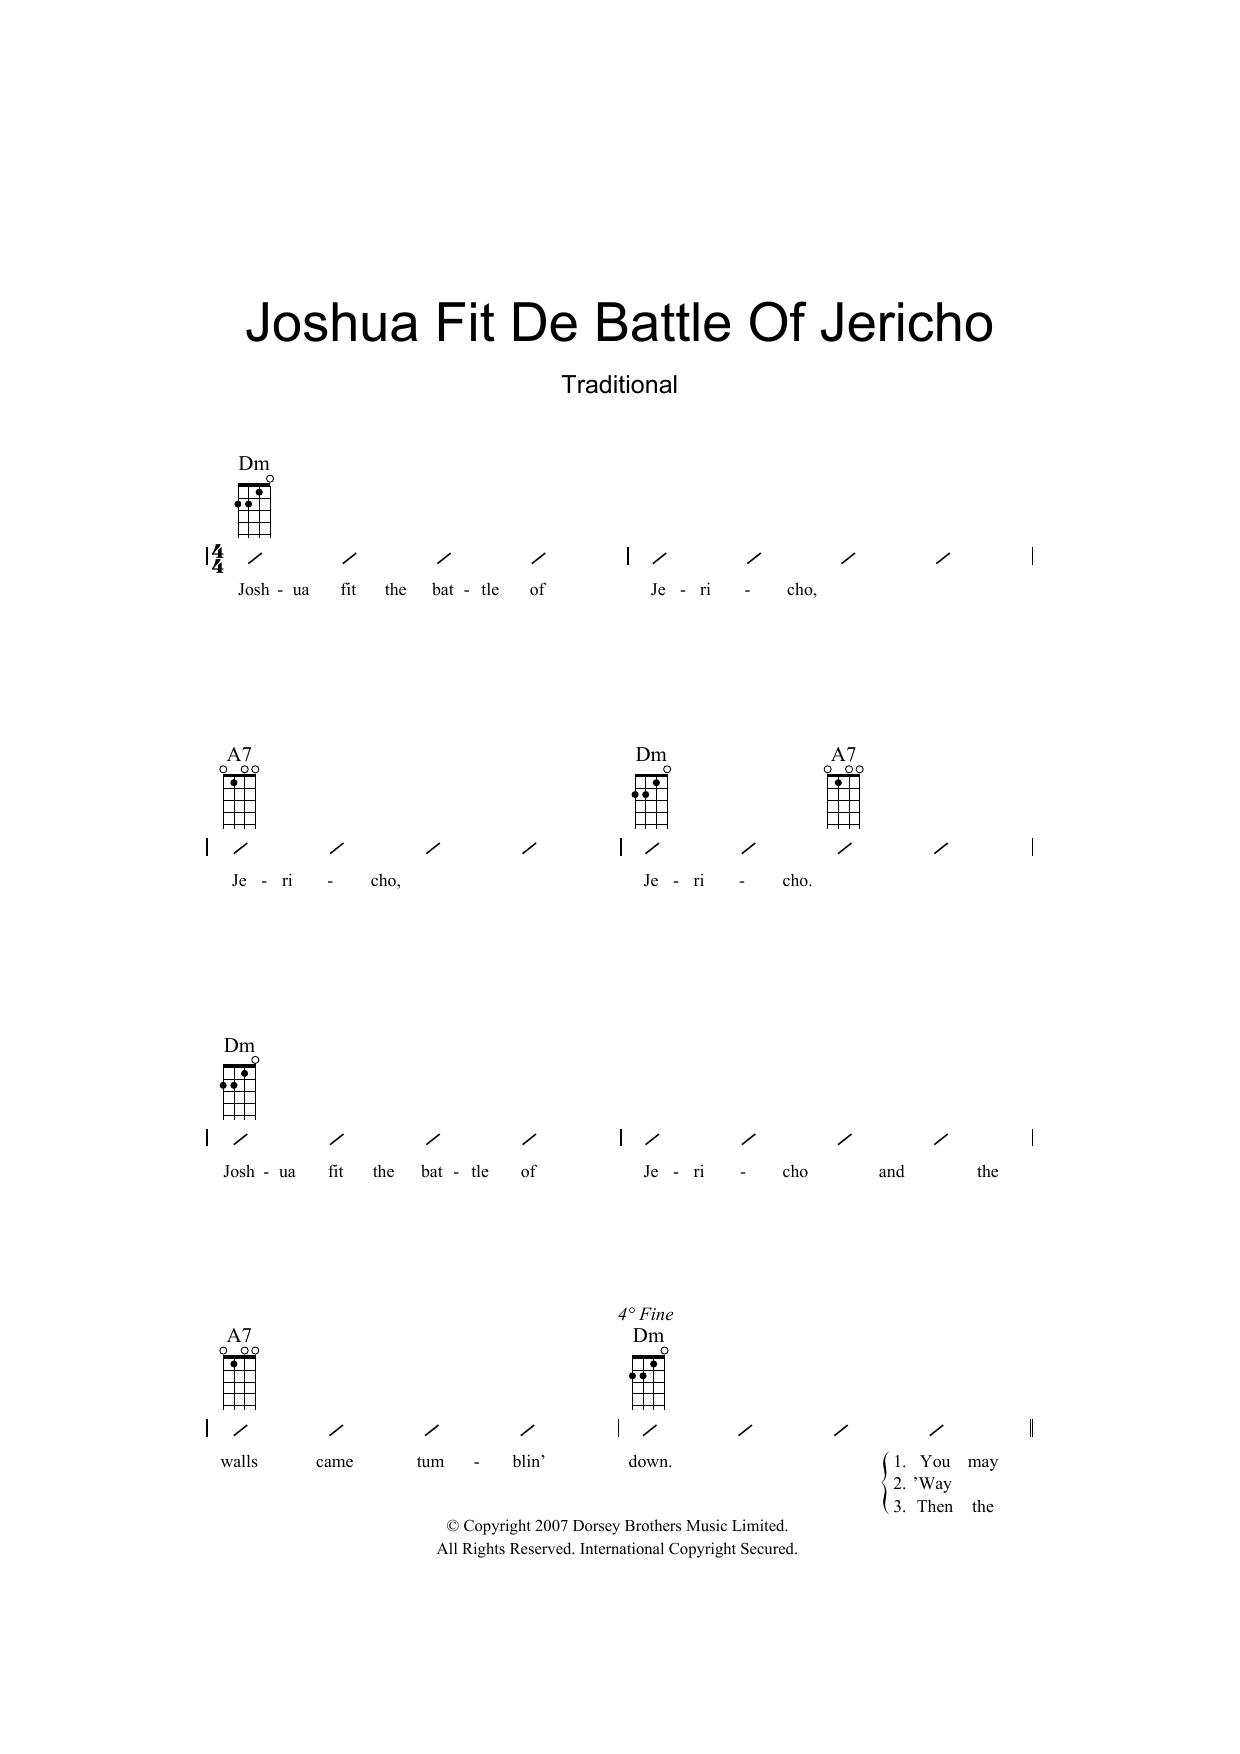 Download Traditional Joshua Fit De Battle Of Jericho Sheet Music